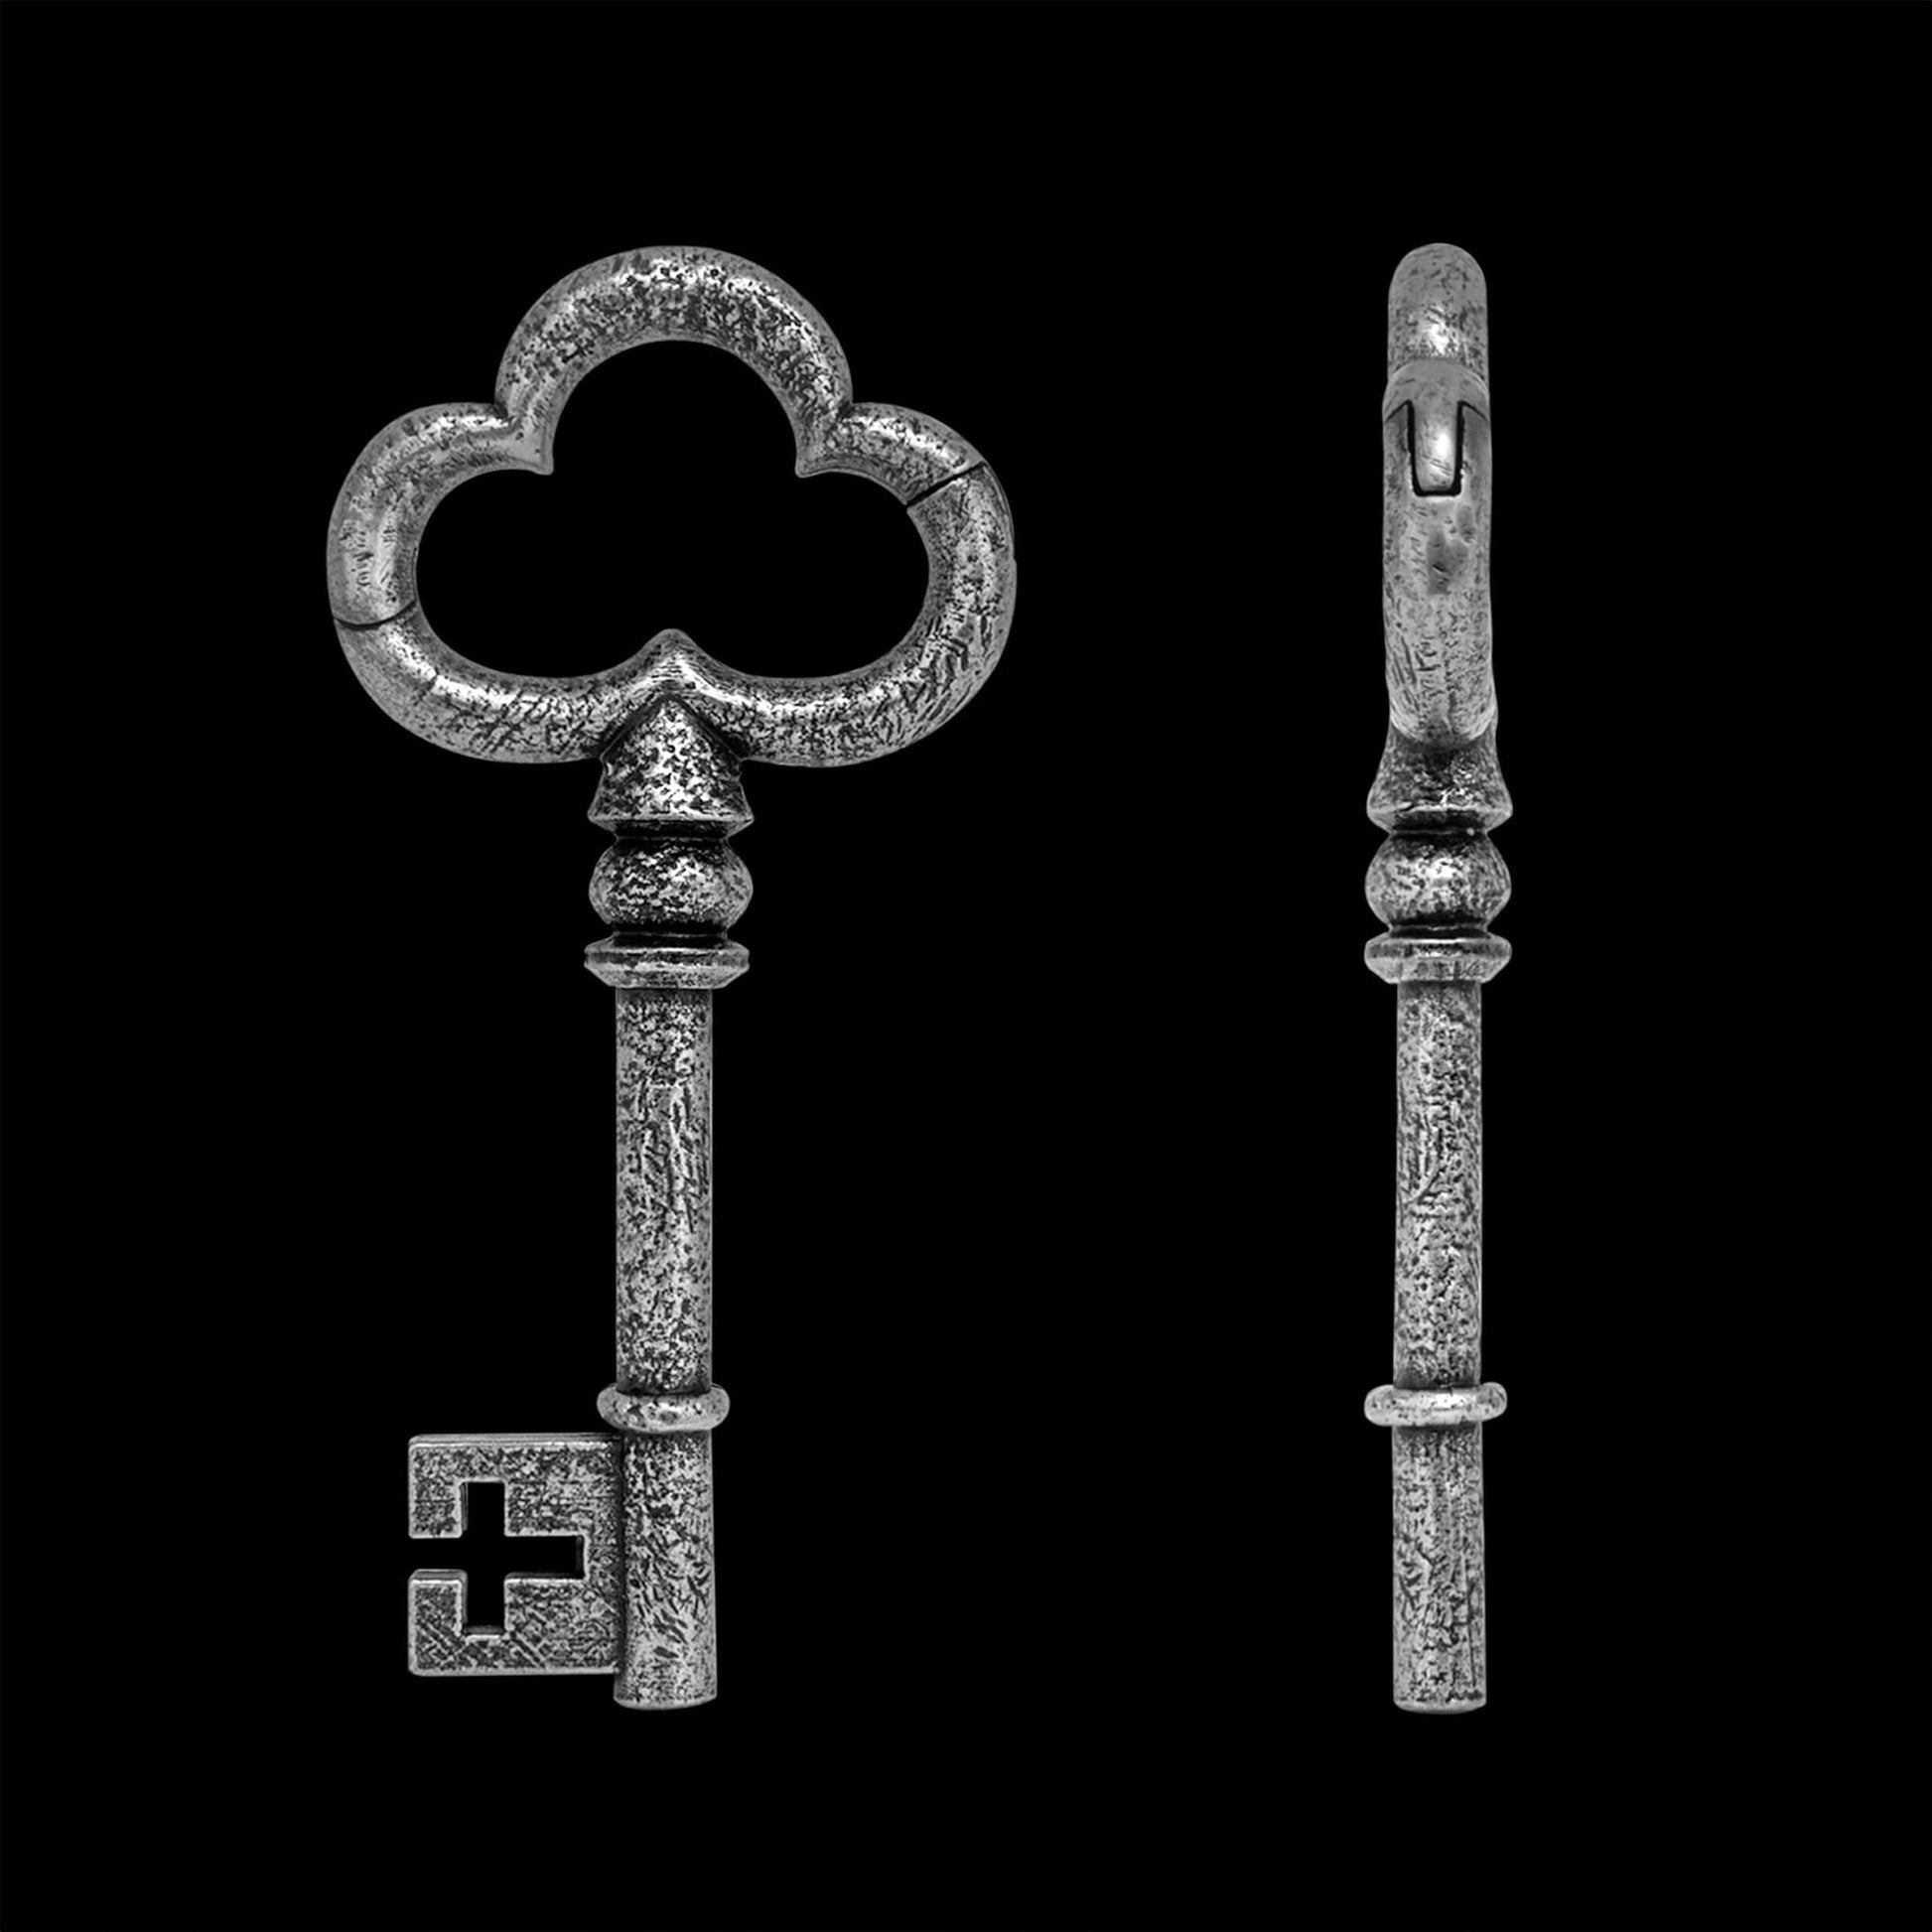 Grimm Key Hangers - Hangers - Ask and Embla